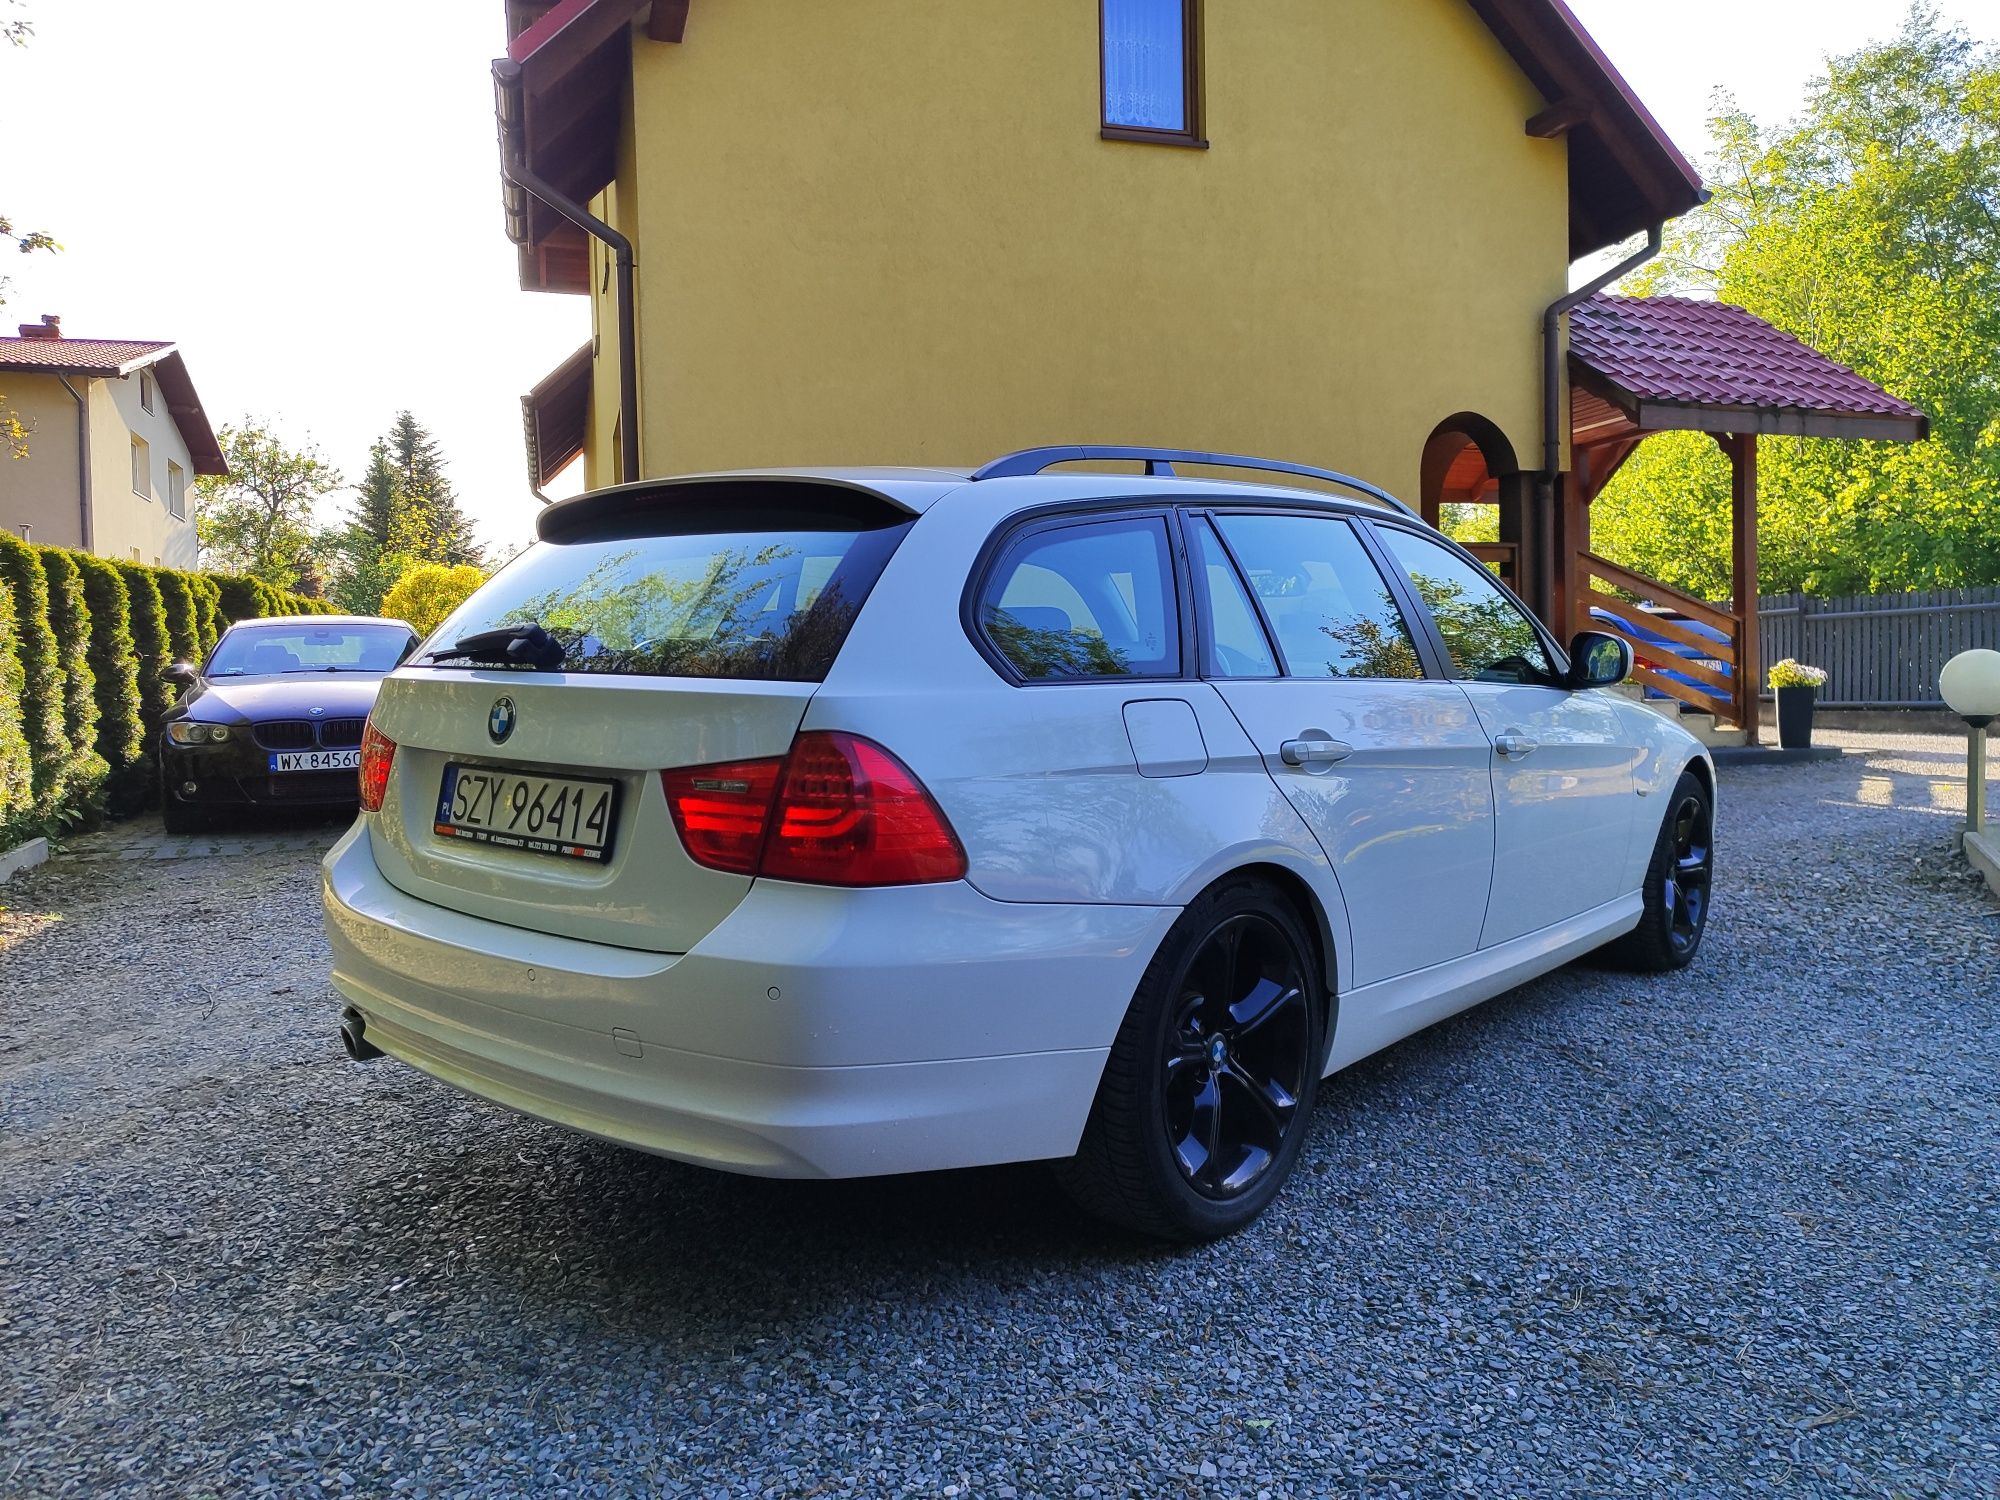 BMW E91 320d XDrive manual Alpinweiss shadowline focal